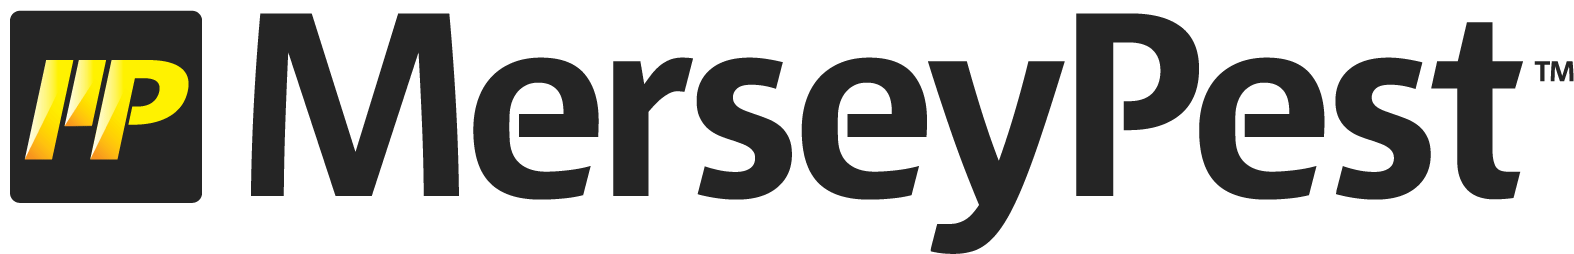 MERSEYPEST logo